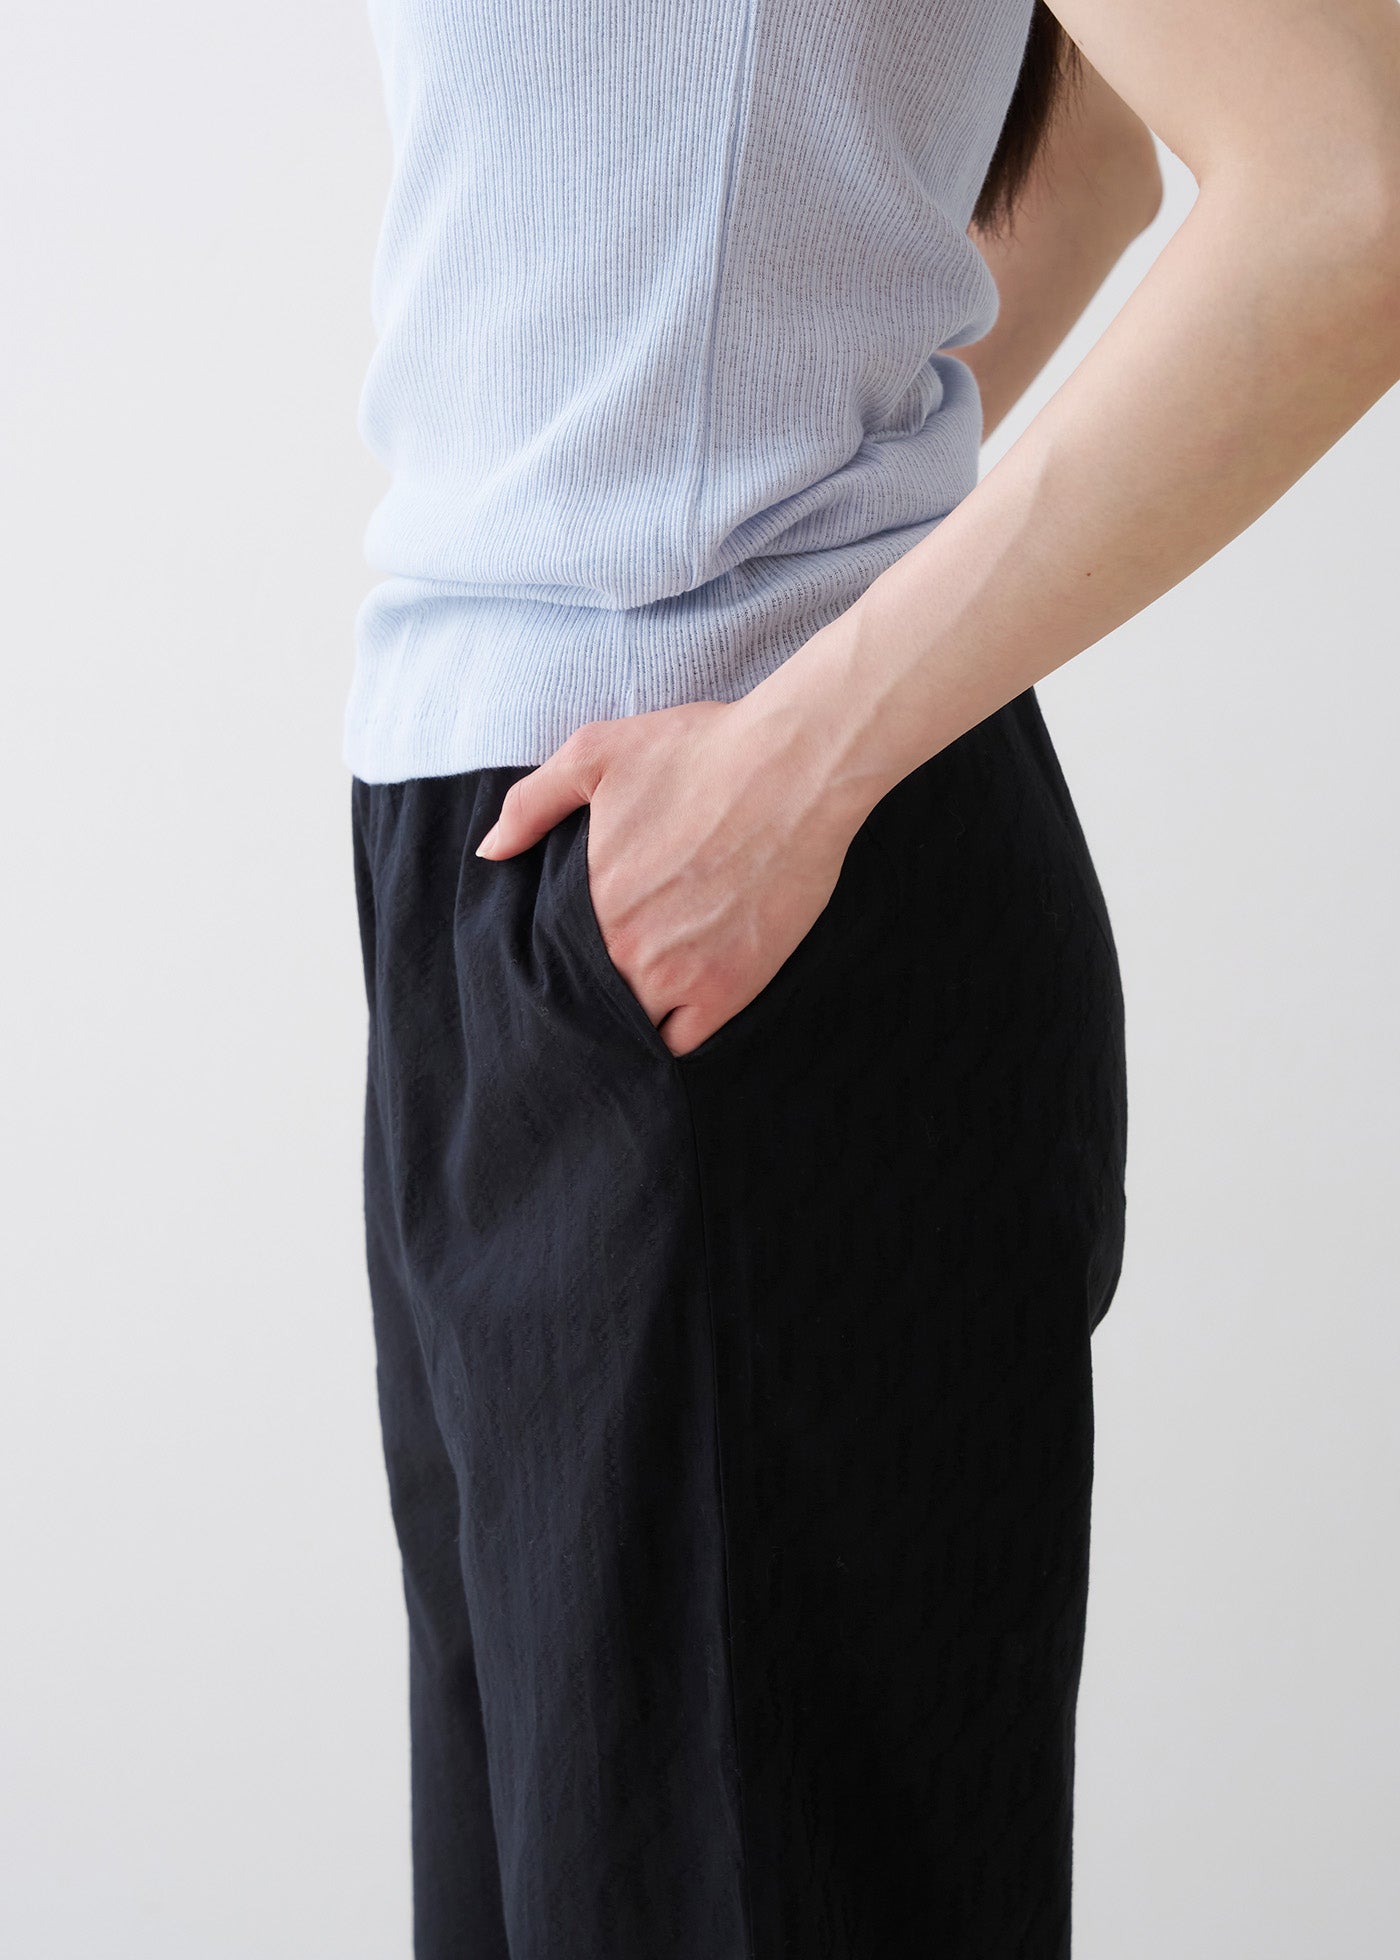 Cotton Dobby Lace & Pintuck Pants | Pasand by ne Quittez pas 